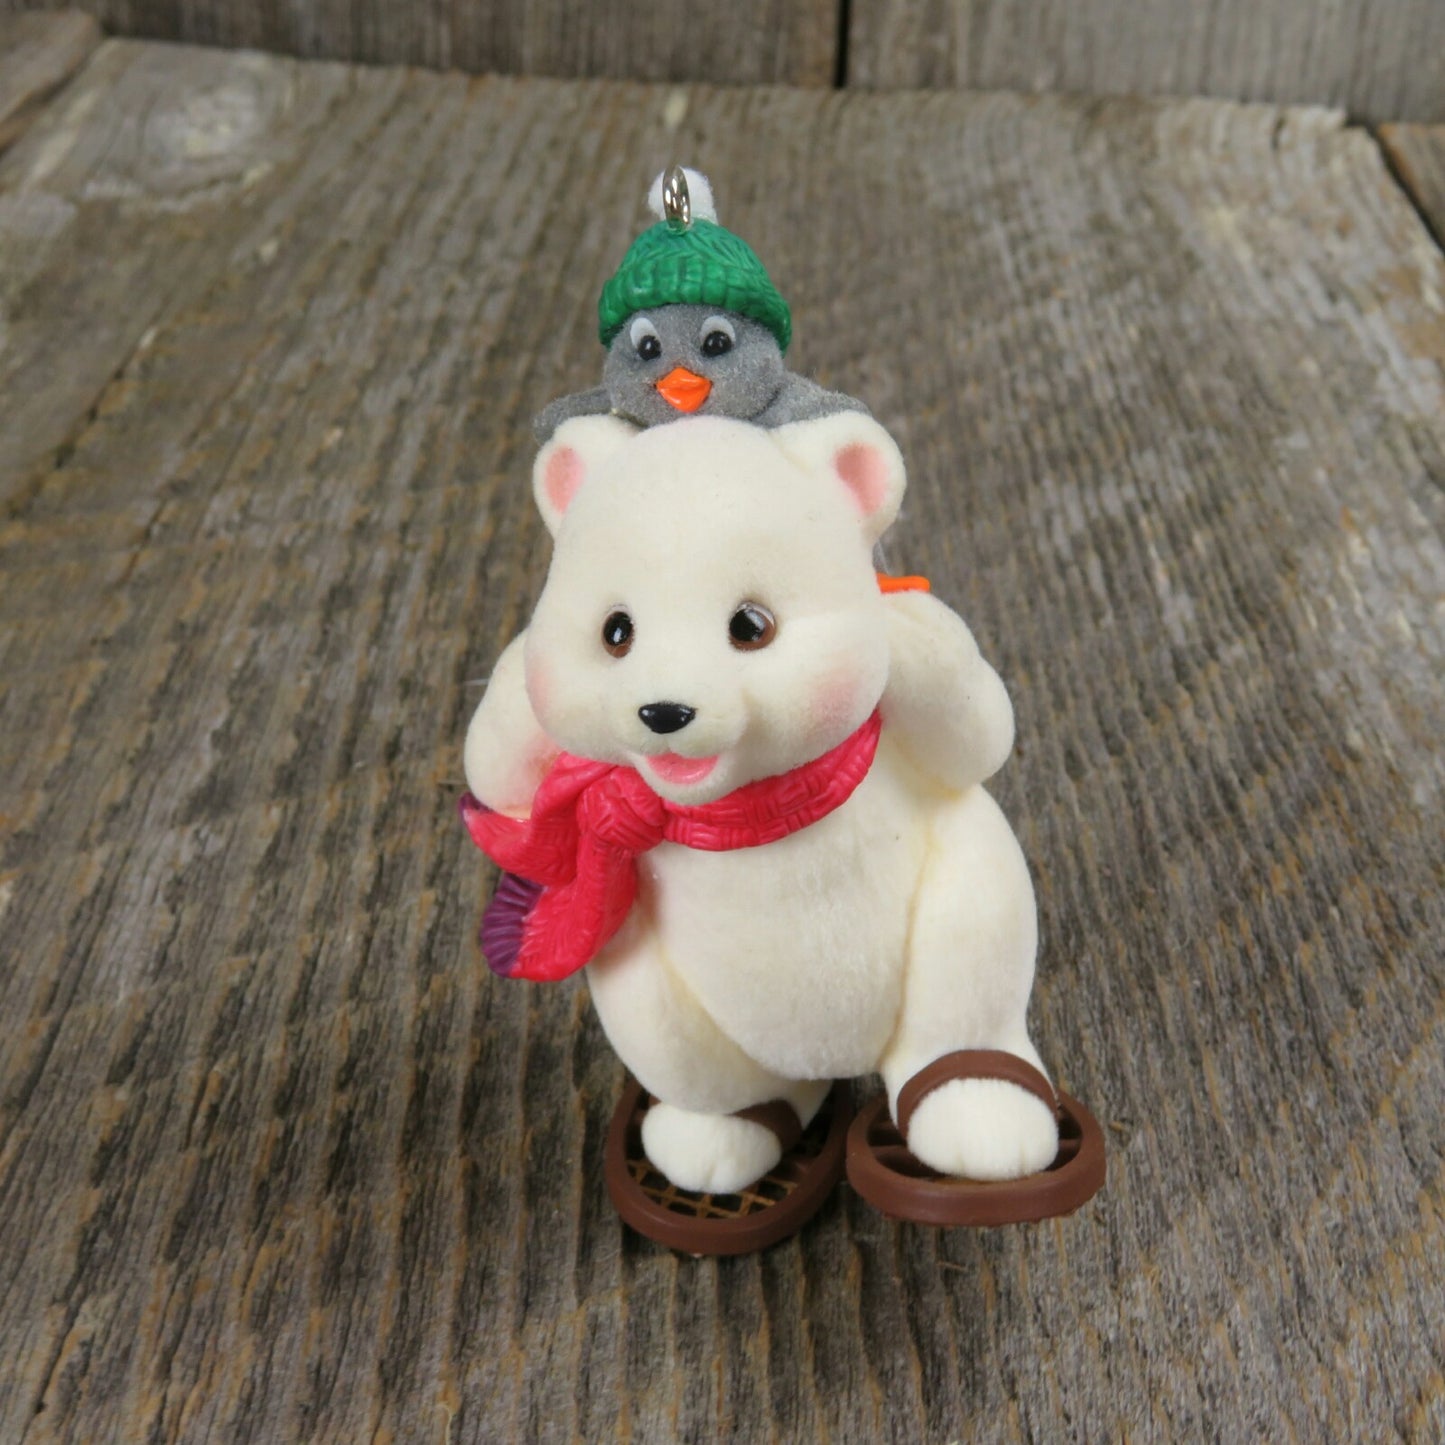 Snowshoe Taxi Hallmark Keepsake Christmas Tree Ornament Snowman Penguin 2003 - At Grandma's Table